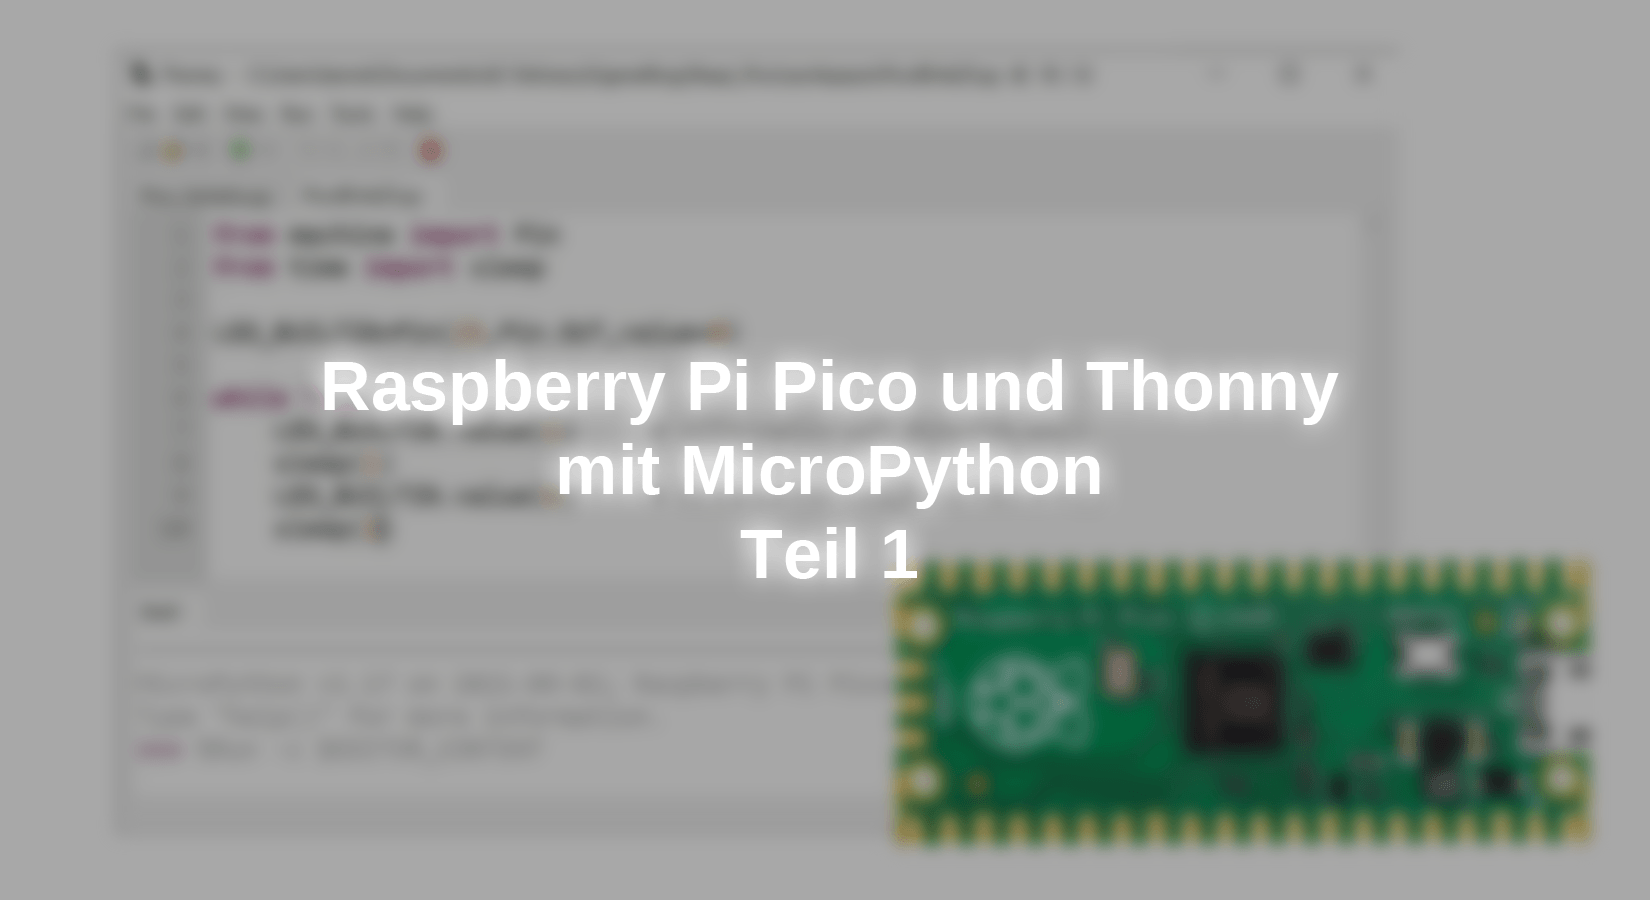 Raspberry Pi Pico und Thonny mit MicroPython - Teil 1 - AZ-Delivery